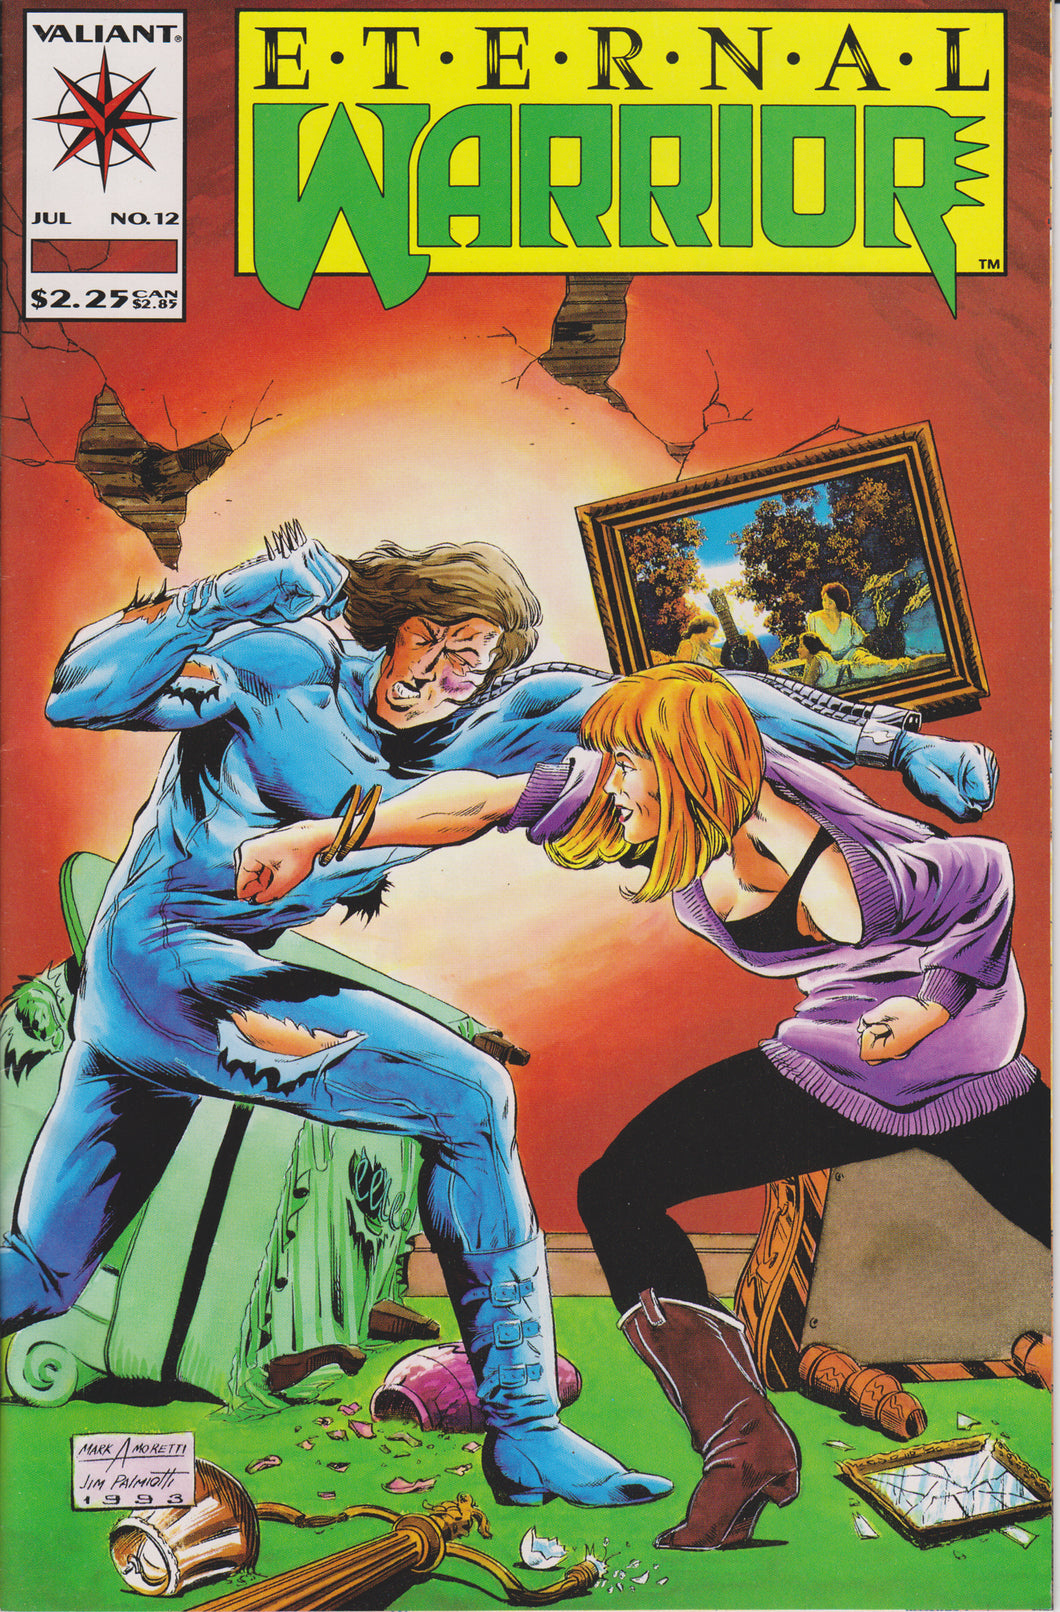 ETERNAL WARRIOR #12 COMIC BOOK ~ Valiant Comics